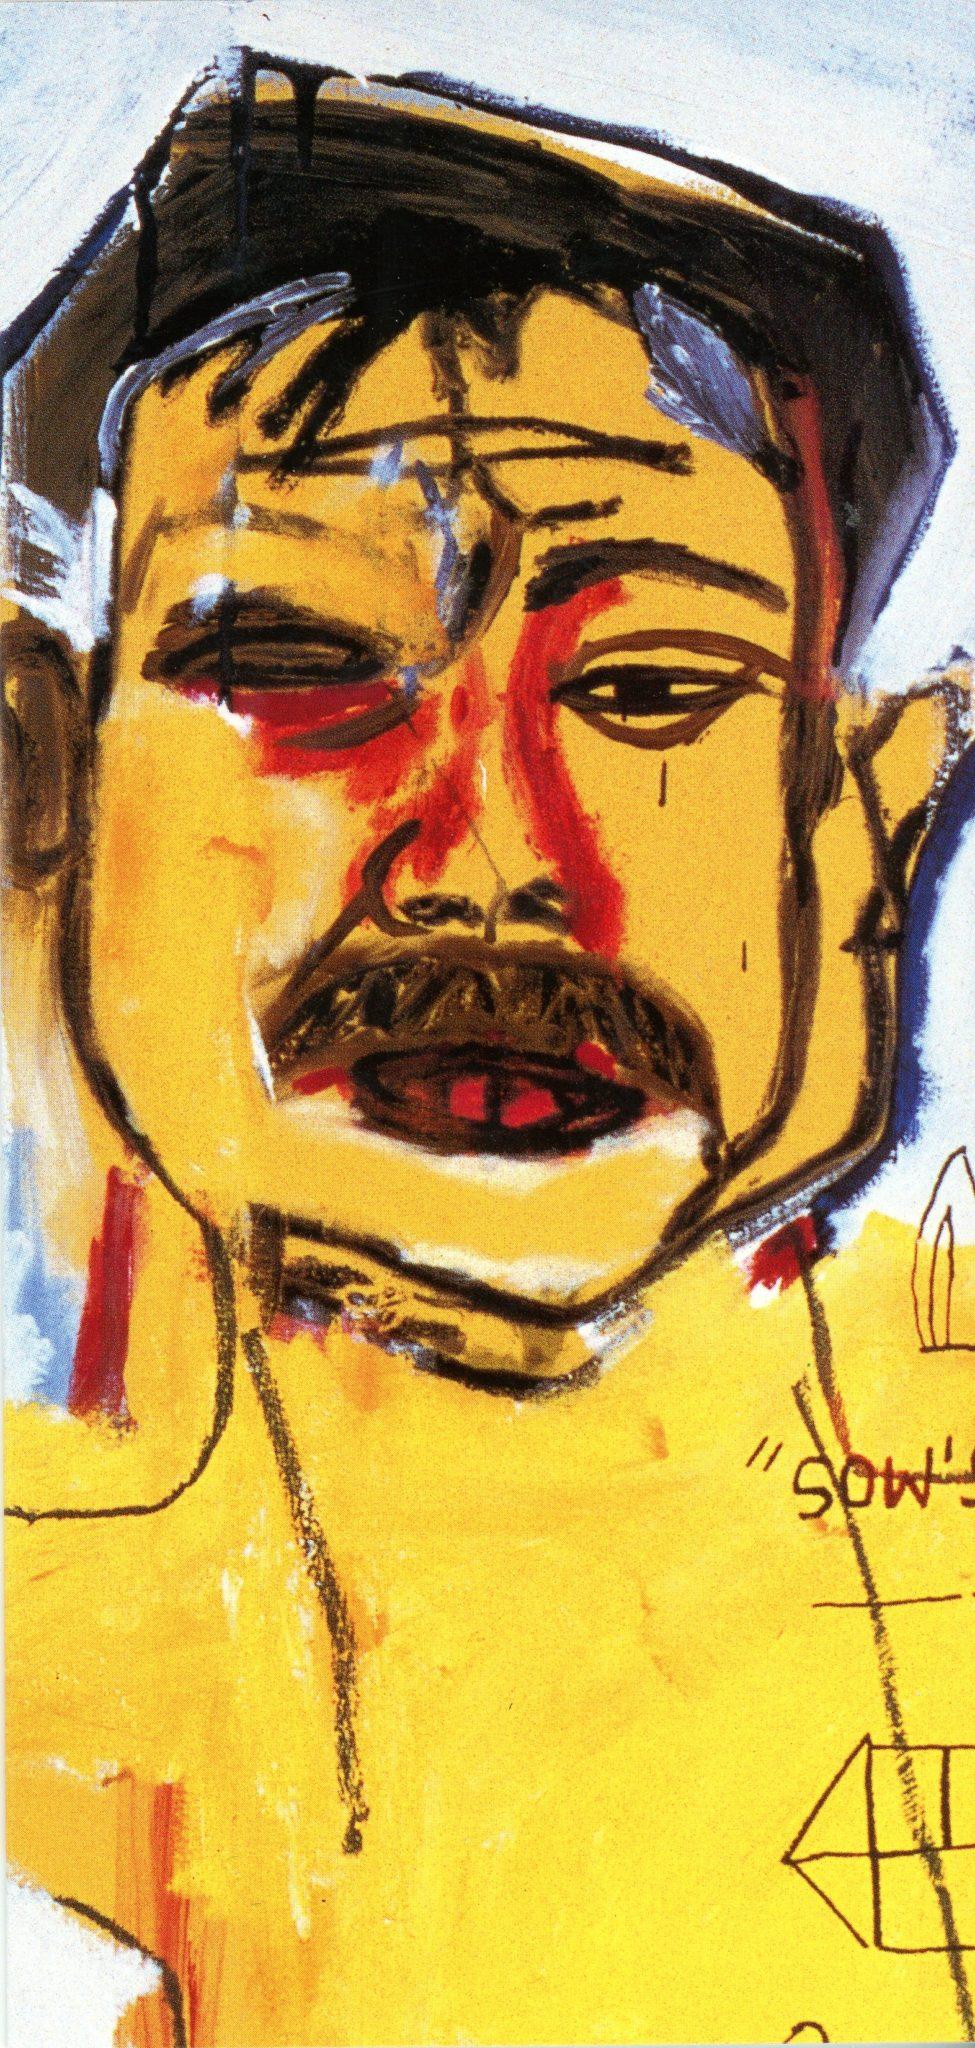 Basquiat Enrico Navarra Gallery Paris 1999 (announcement) - Print by after Jean-Michel Basquiat